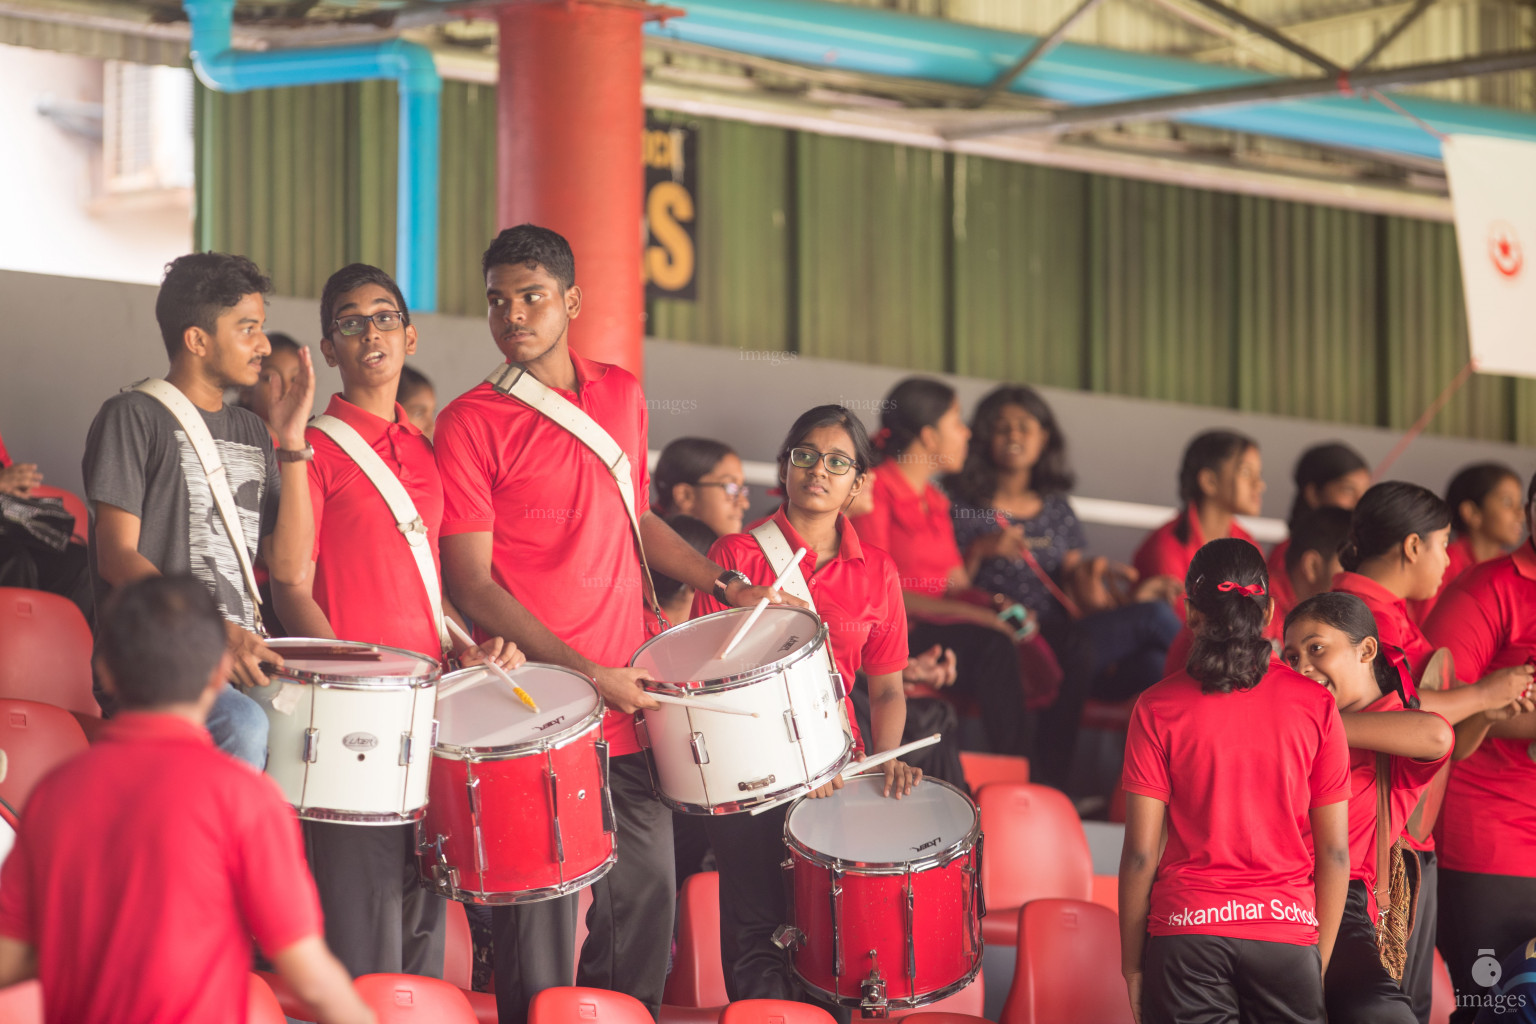 Iskandhar School vs Imaduddin School in Mamen Inter-School Football Tournament 2019 (U15) on 28th February 2019, Monday in Male' Maldives (Images.mv Photo: Suadh Abdul Sattar)